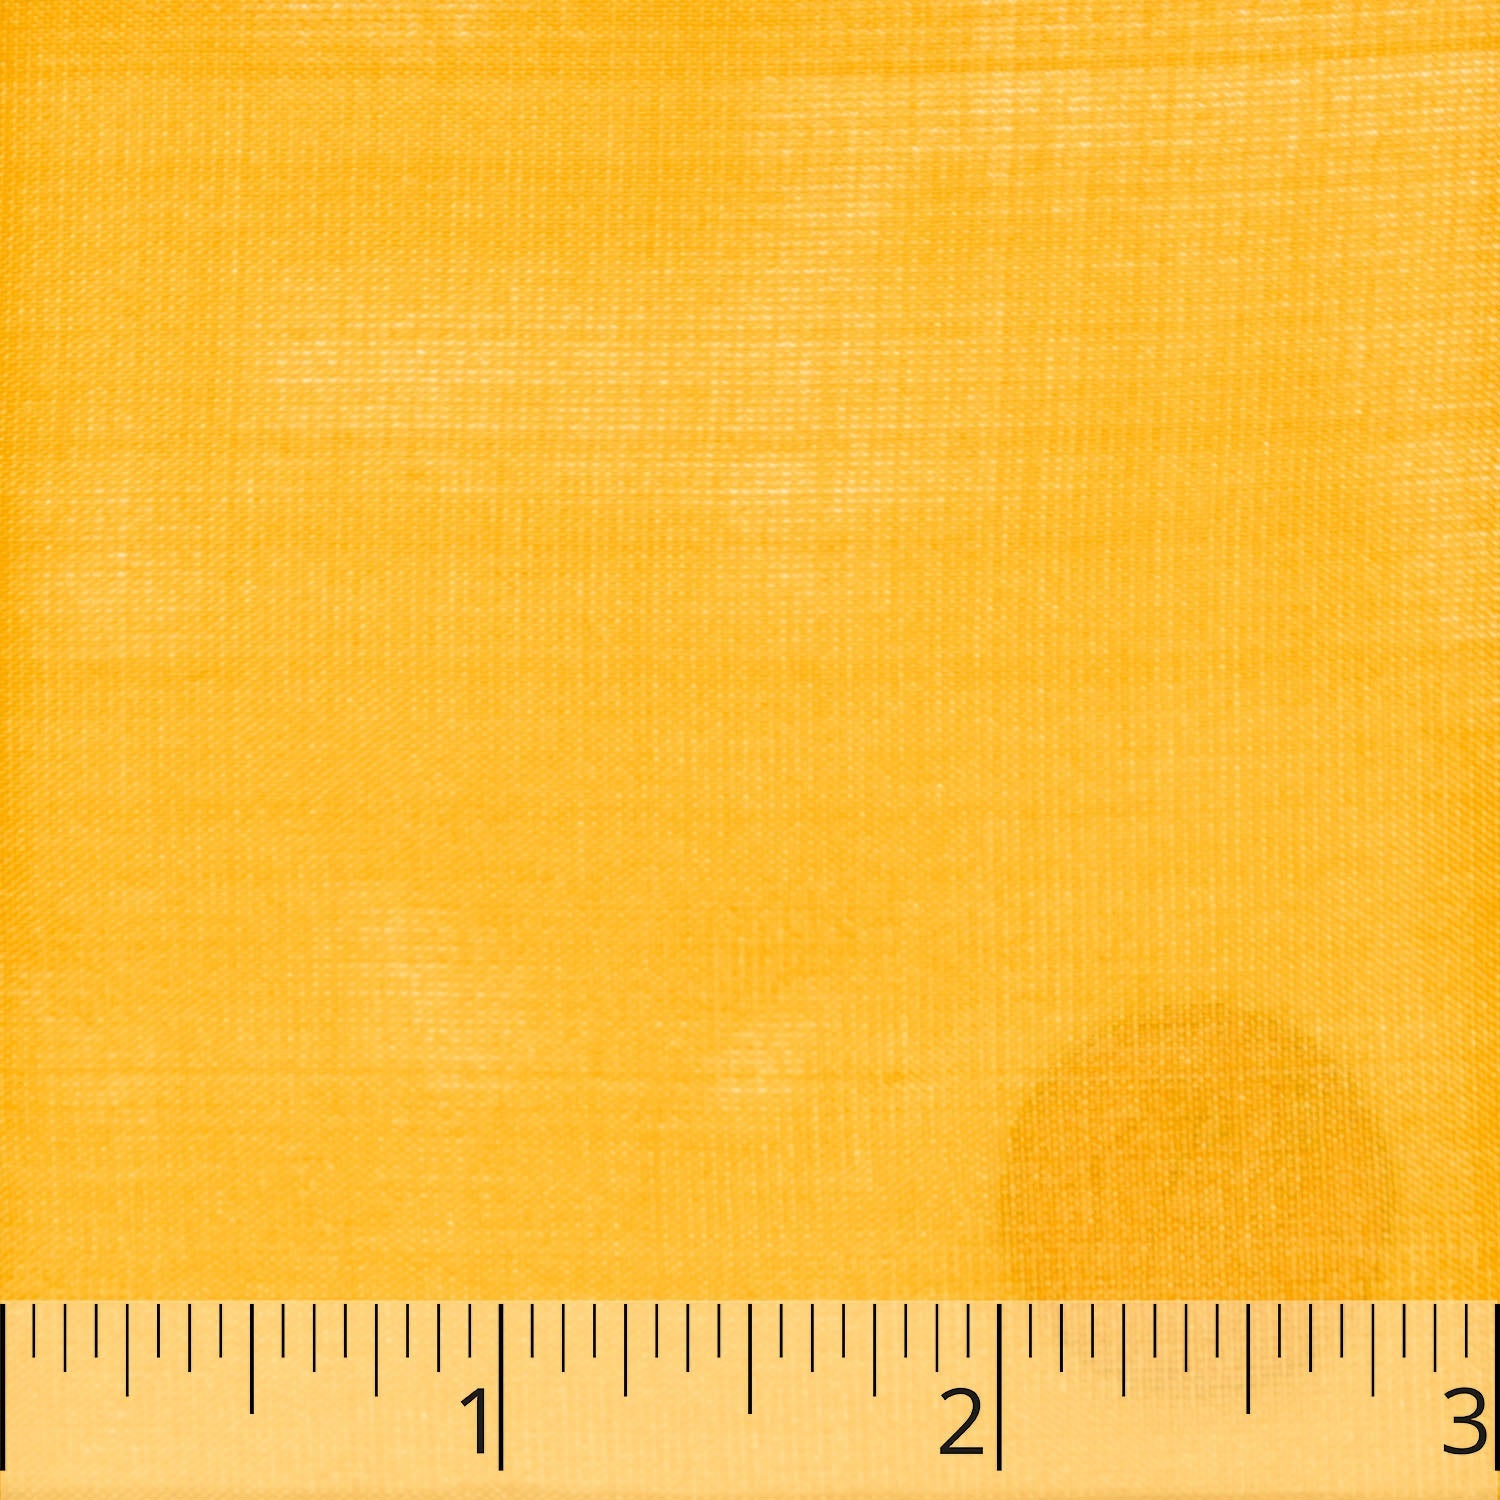 Golden Yellow Silk Lutestring - $20.00 yd. - Burnley & Trowbridge Co.